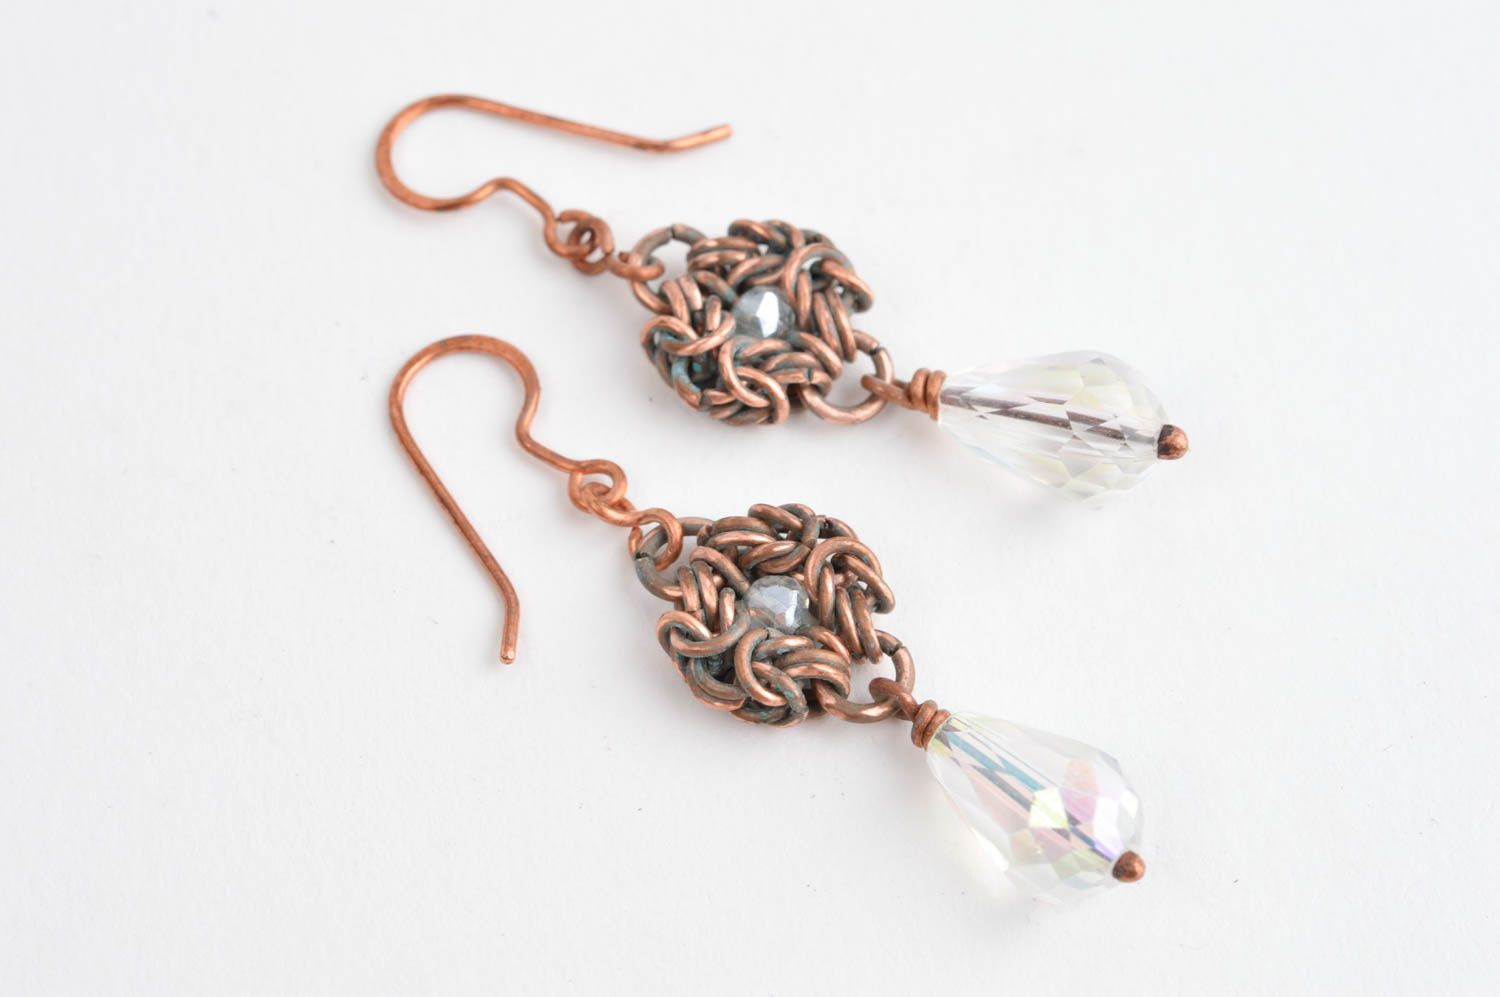 Copper earrings handmade wire wrap earrings metal earrings with charms for girls photo 3